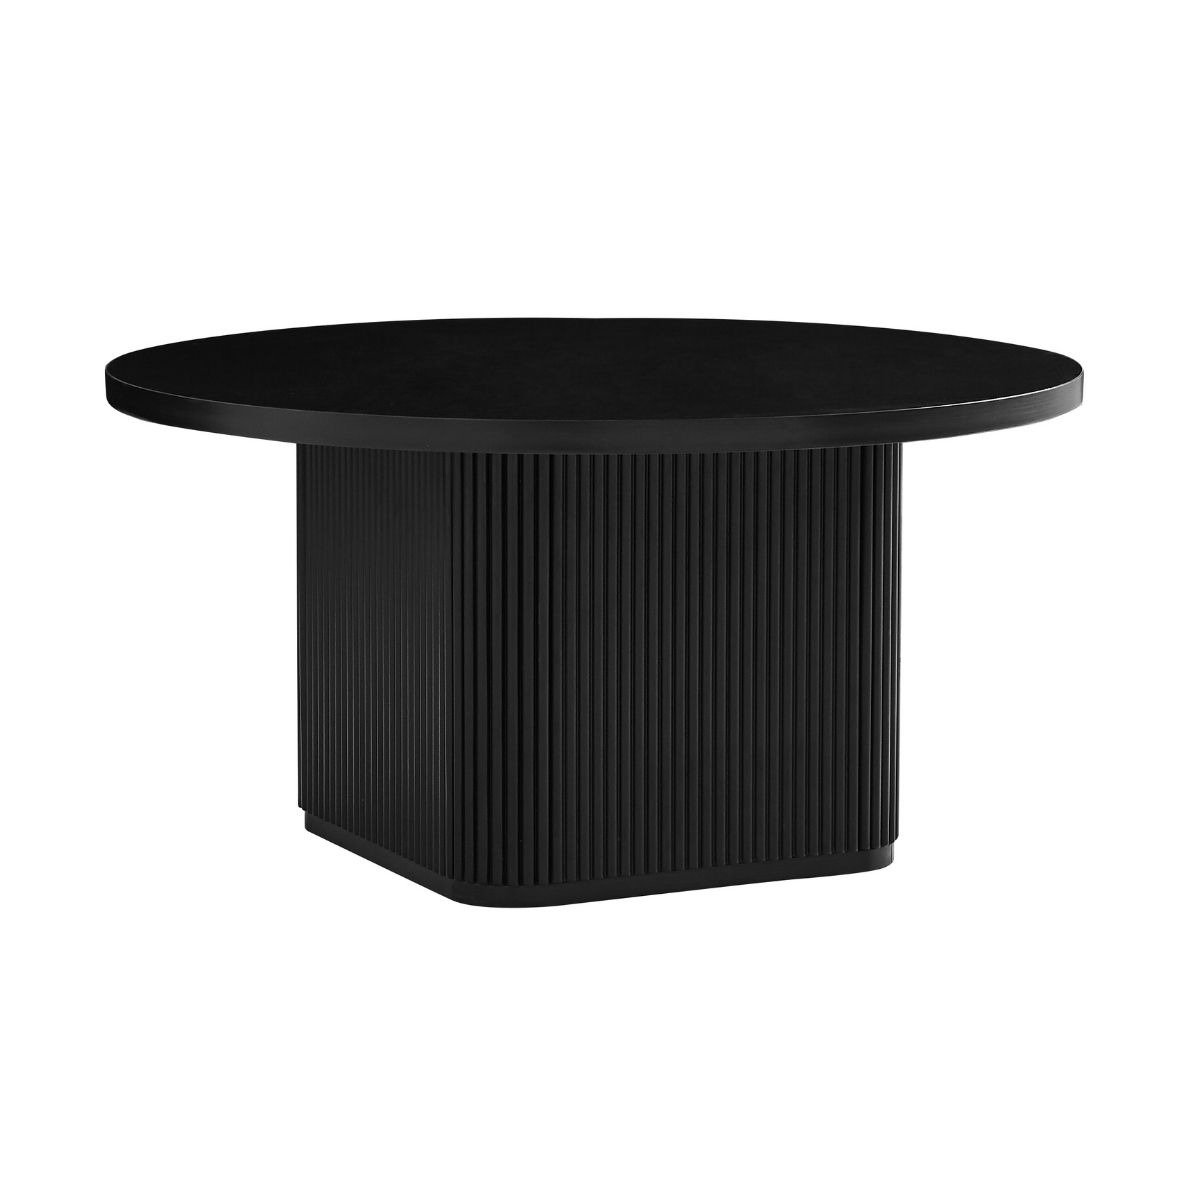 Tate Black Round Column Coffee Table